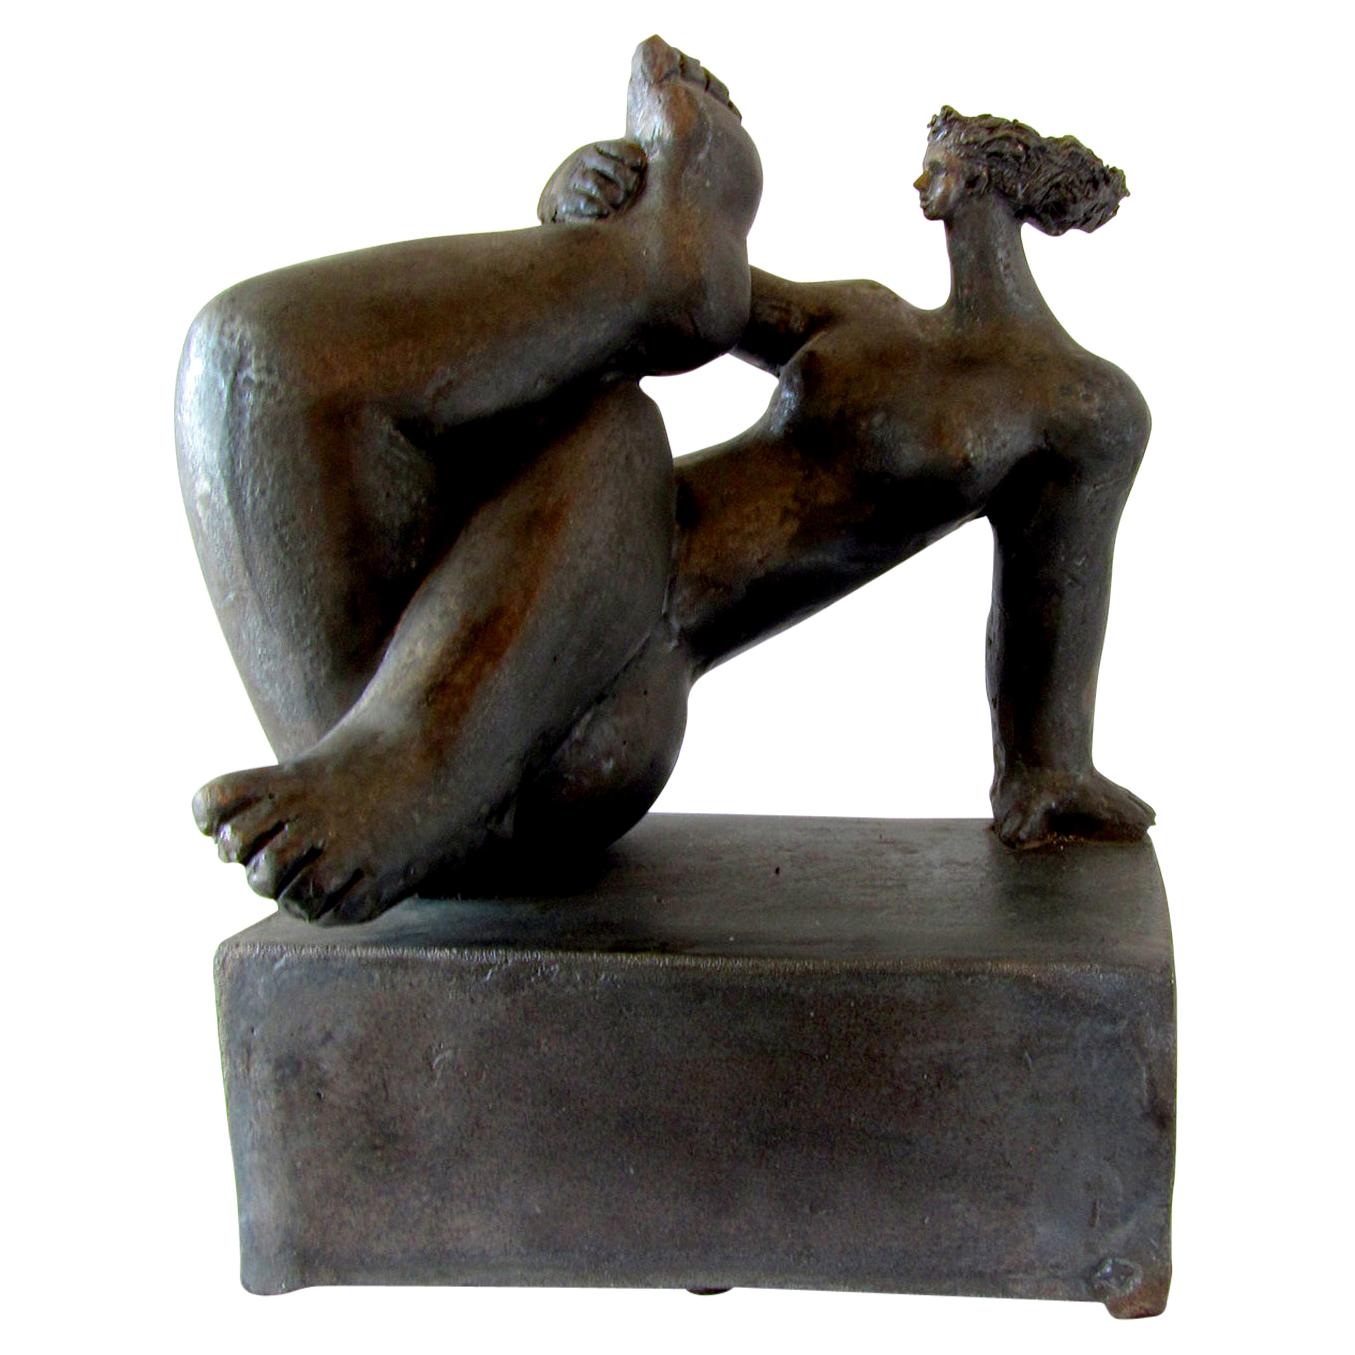 French Modern Glazed Terracotta Figural Sculpture, Michele Raymond, 2007